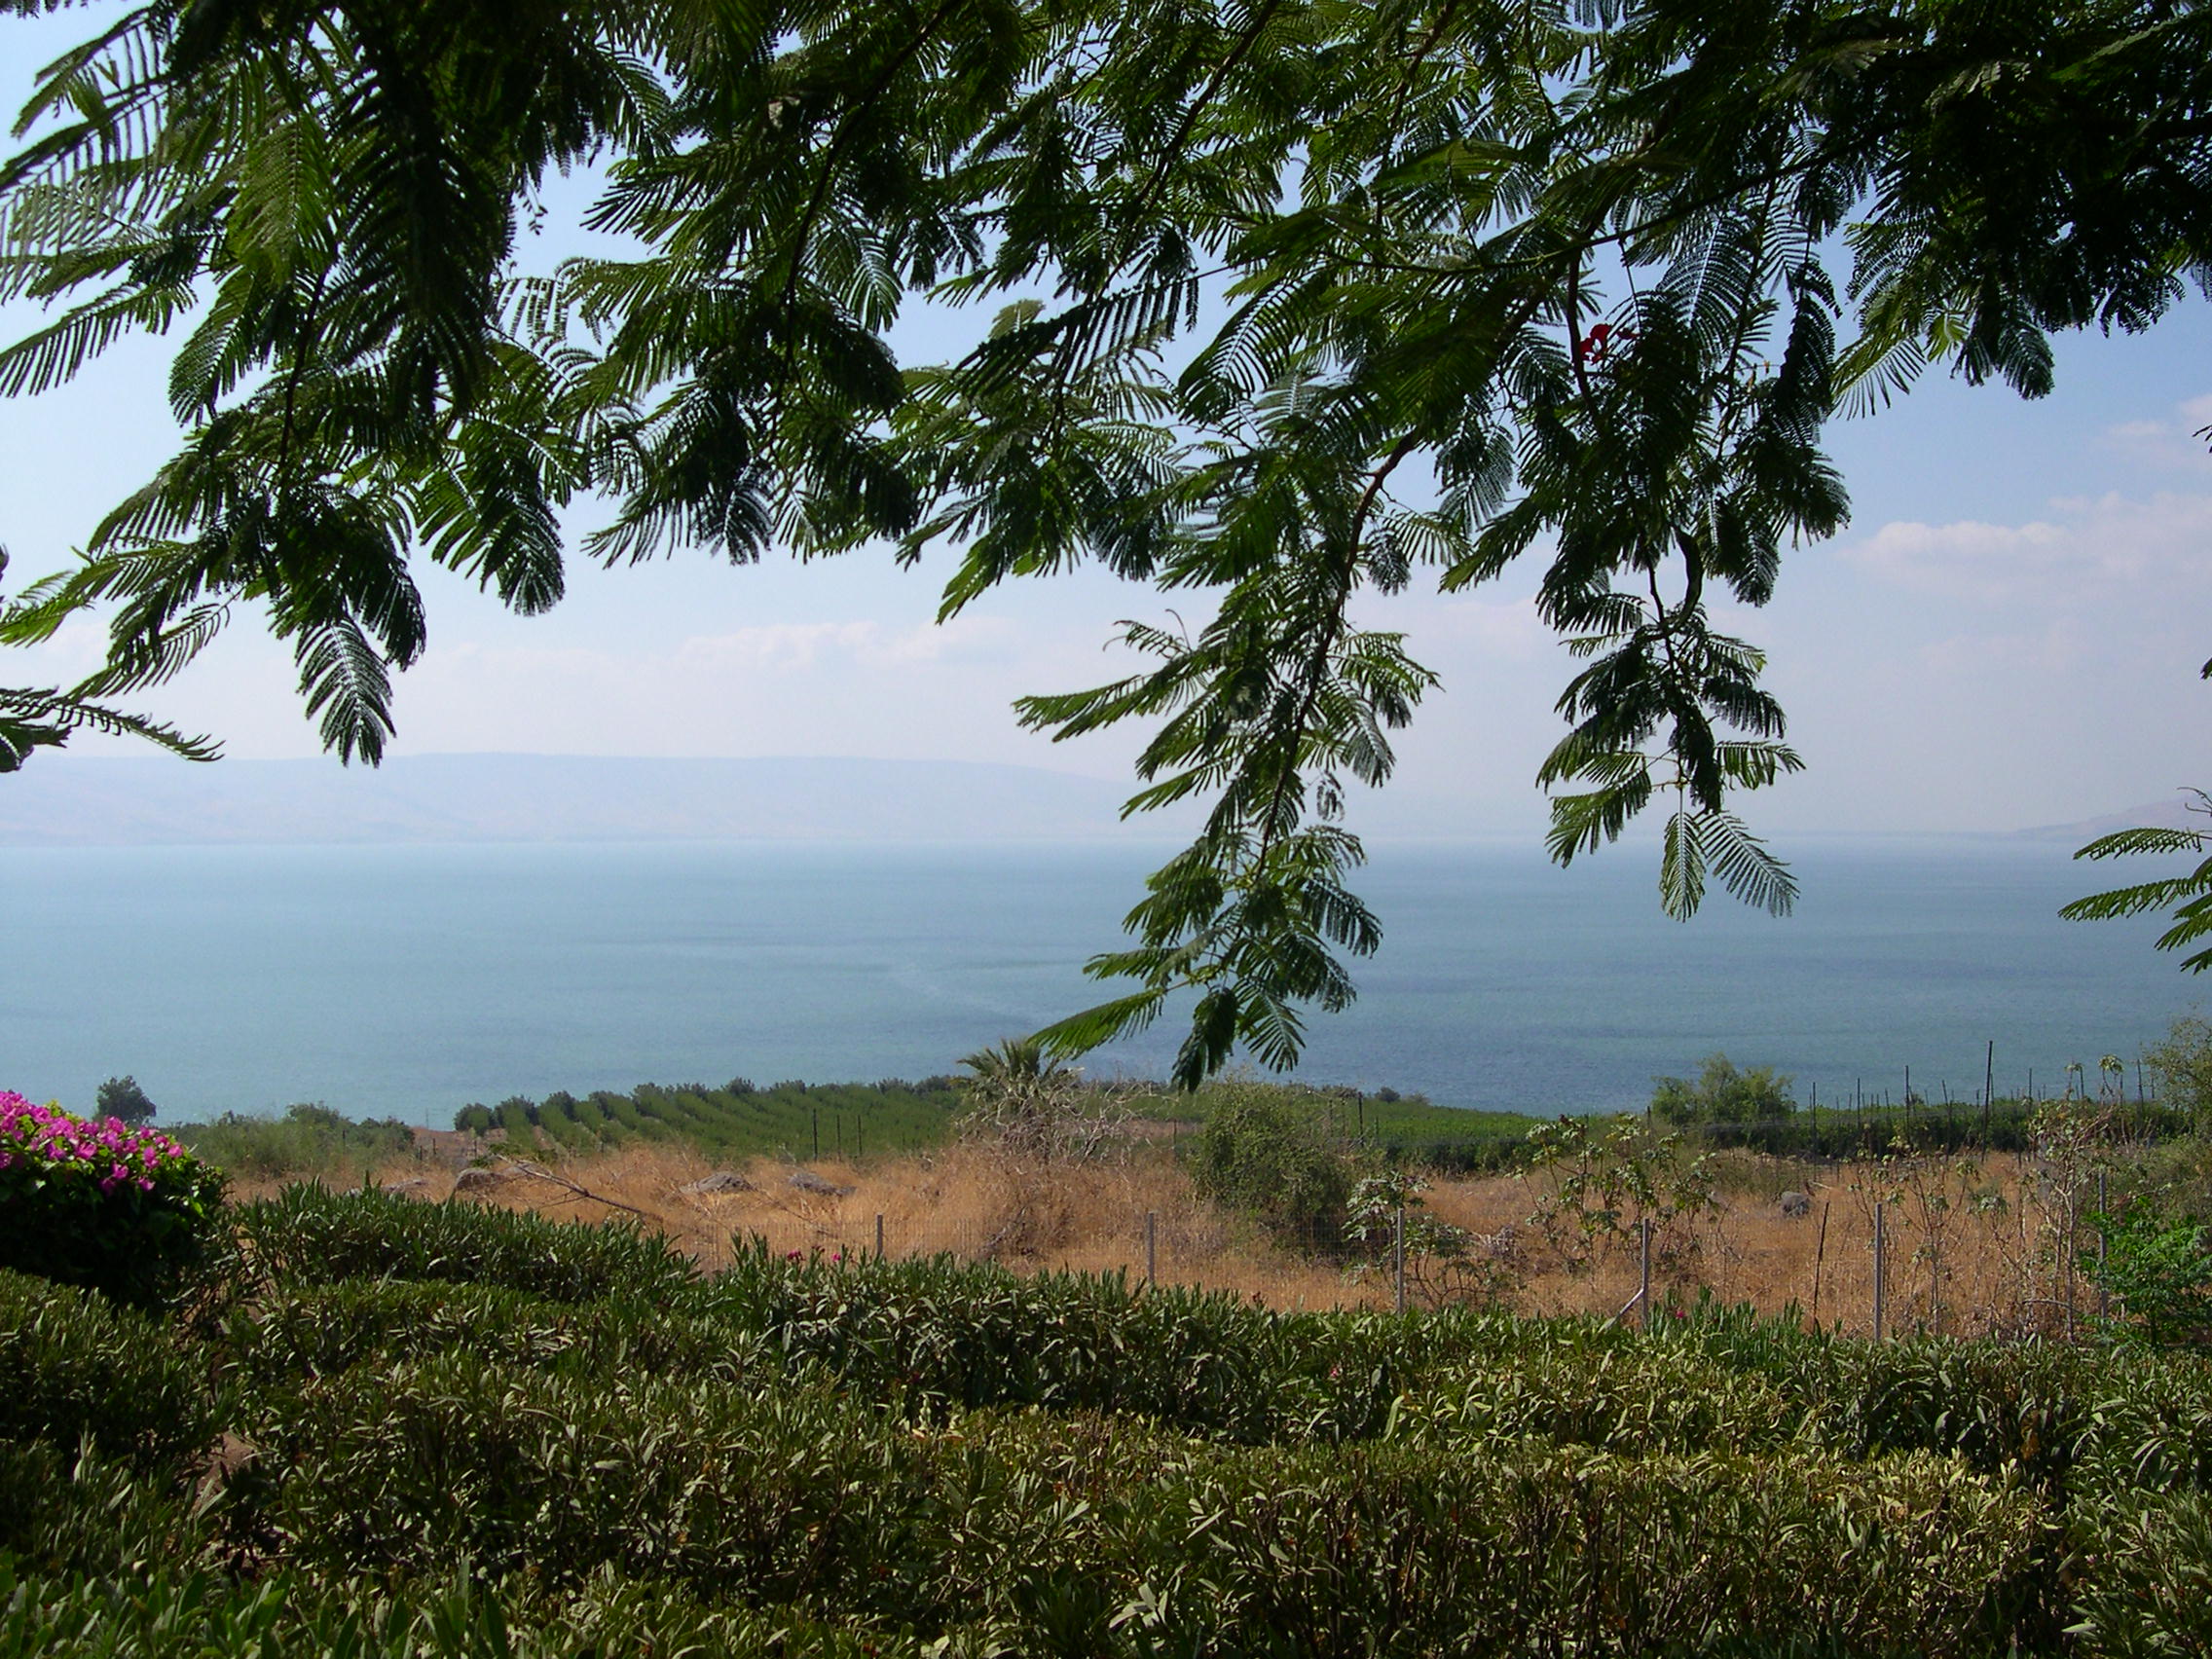 Sea of Galilee (2925955150)